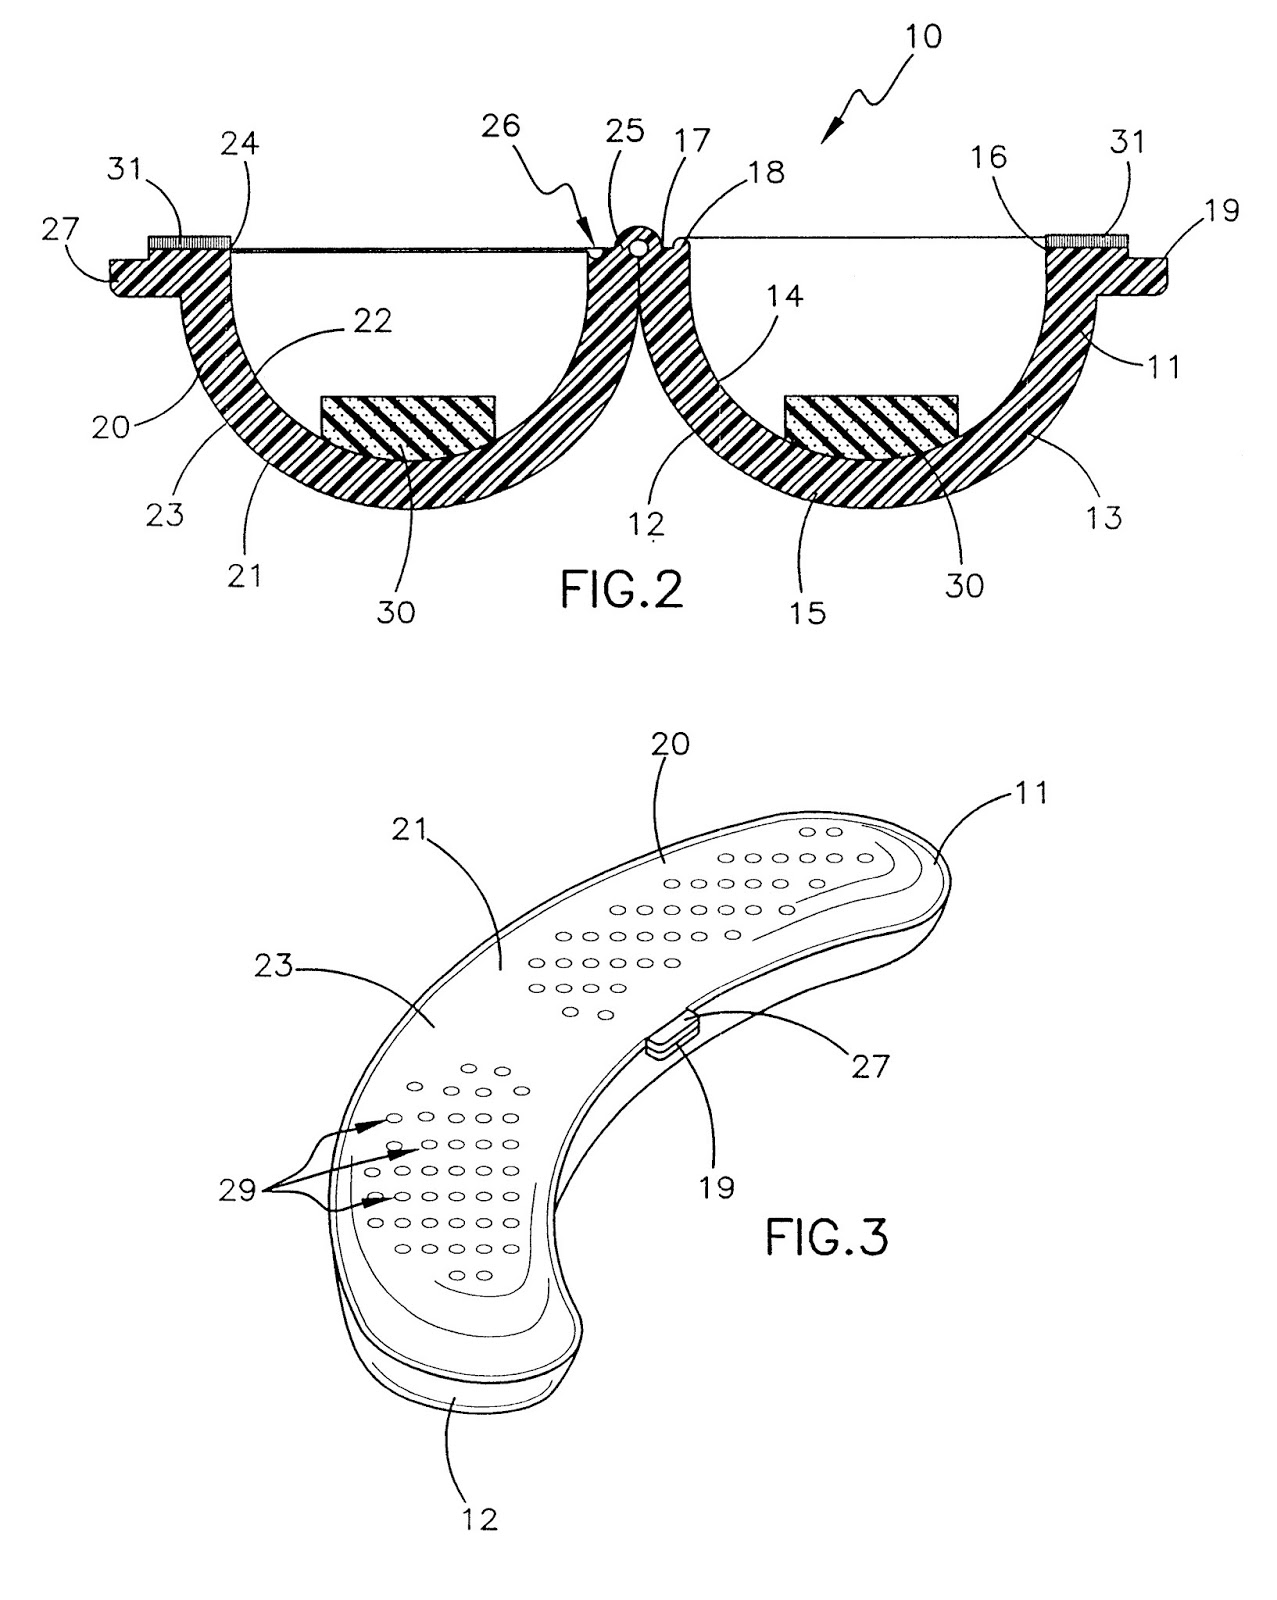 US Patent #6612440, Figure 2 and Figure 3